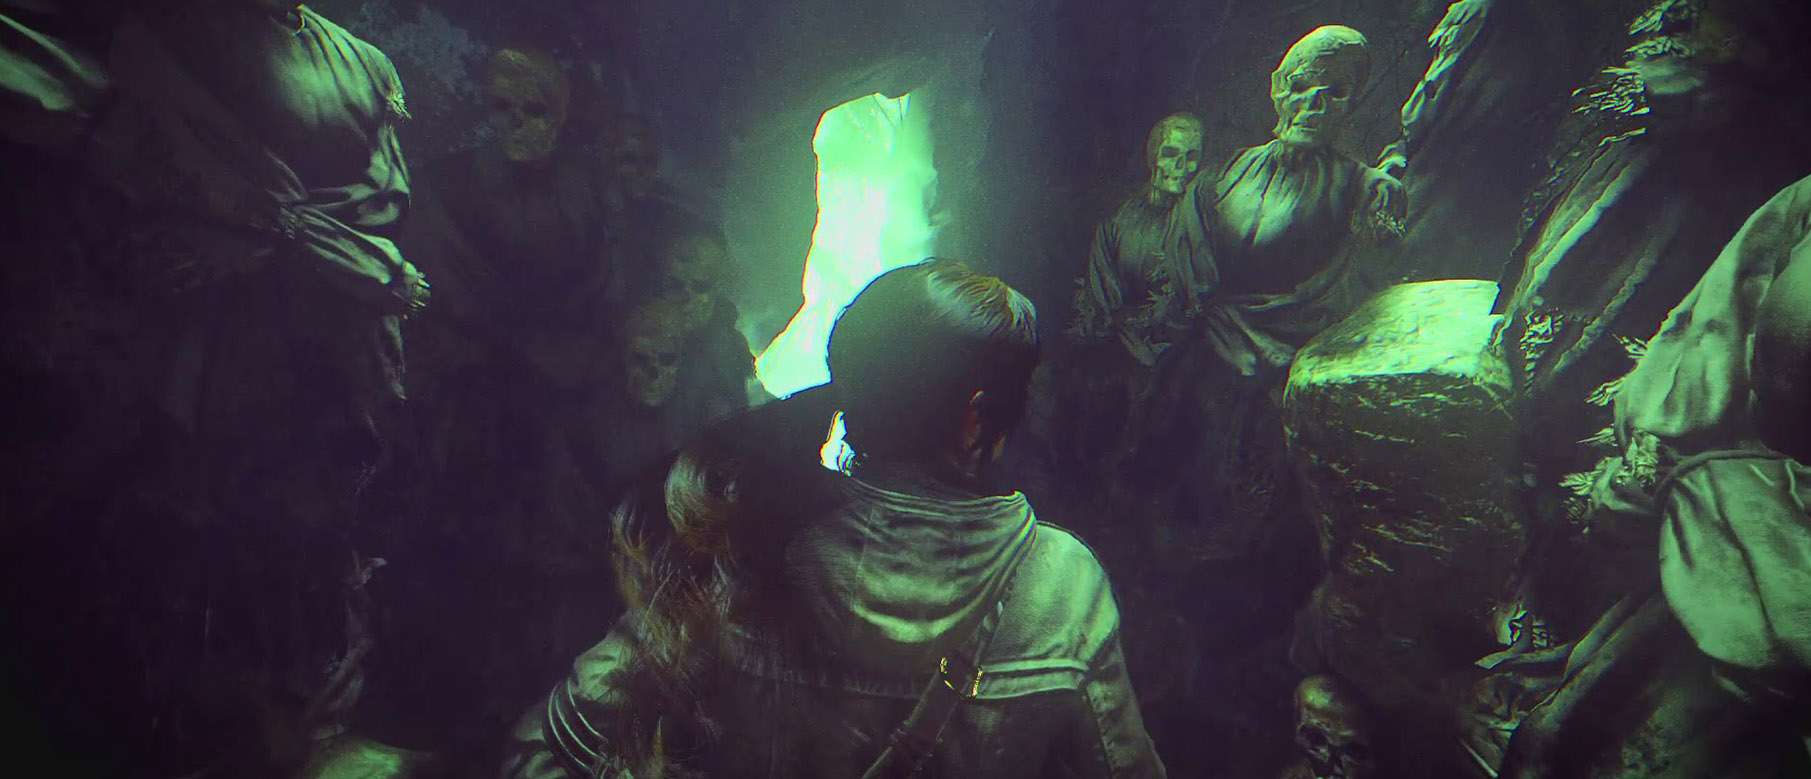 Изображение к DLC Baba Yaga: The Temple of the Witch для Rise of the Tomb Raider выйдет 26 января